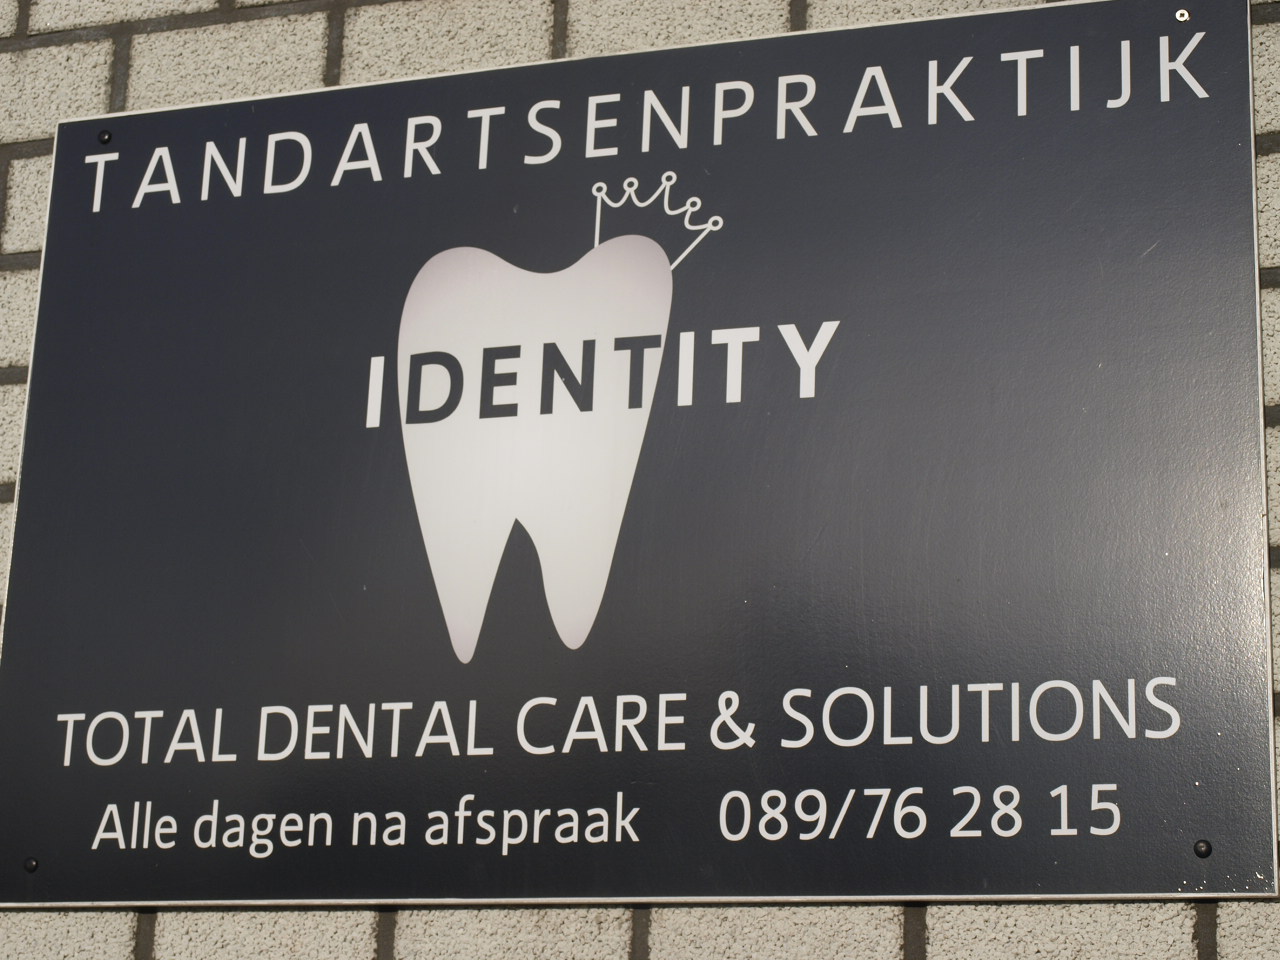 Tandartsenpraktijk Identity